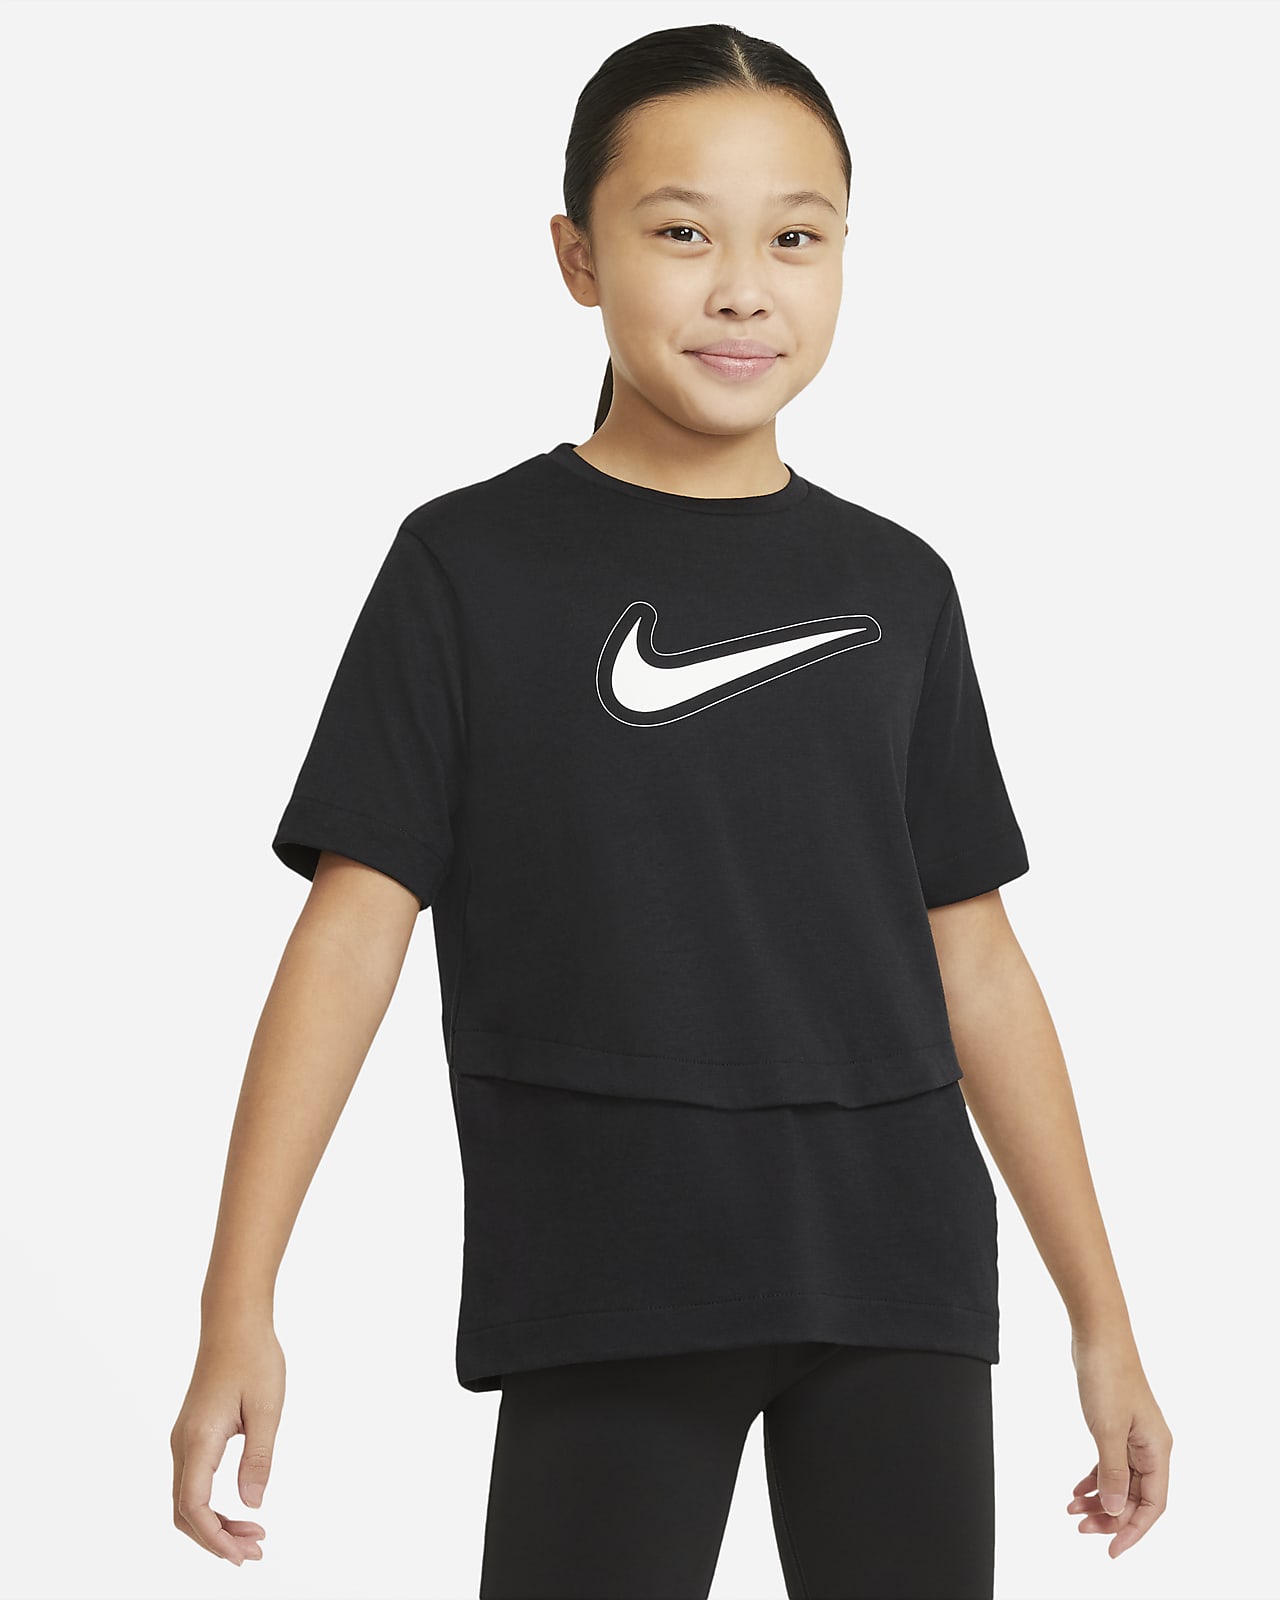 Nike Dri-FIT Trophy Big Short-Sleeve Training (Girls\') Top. Kids